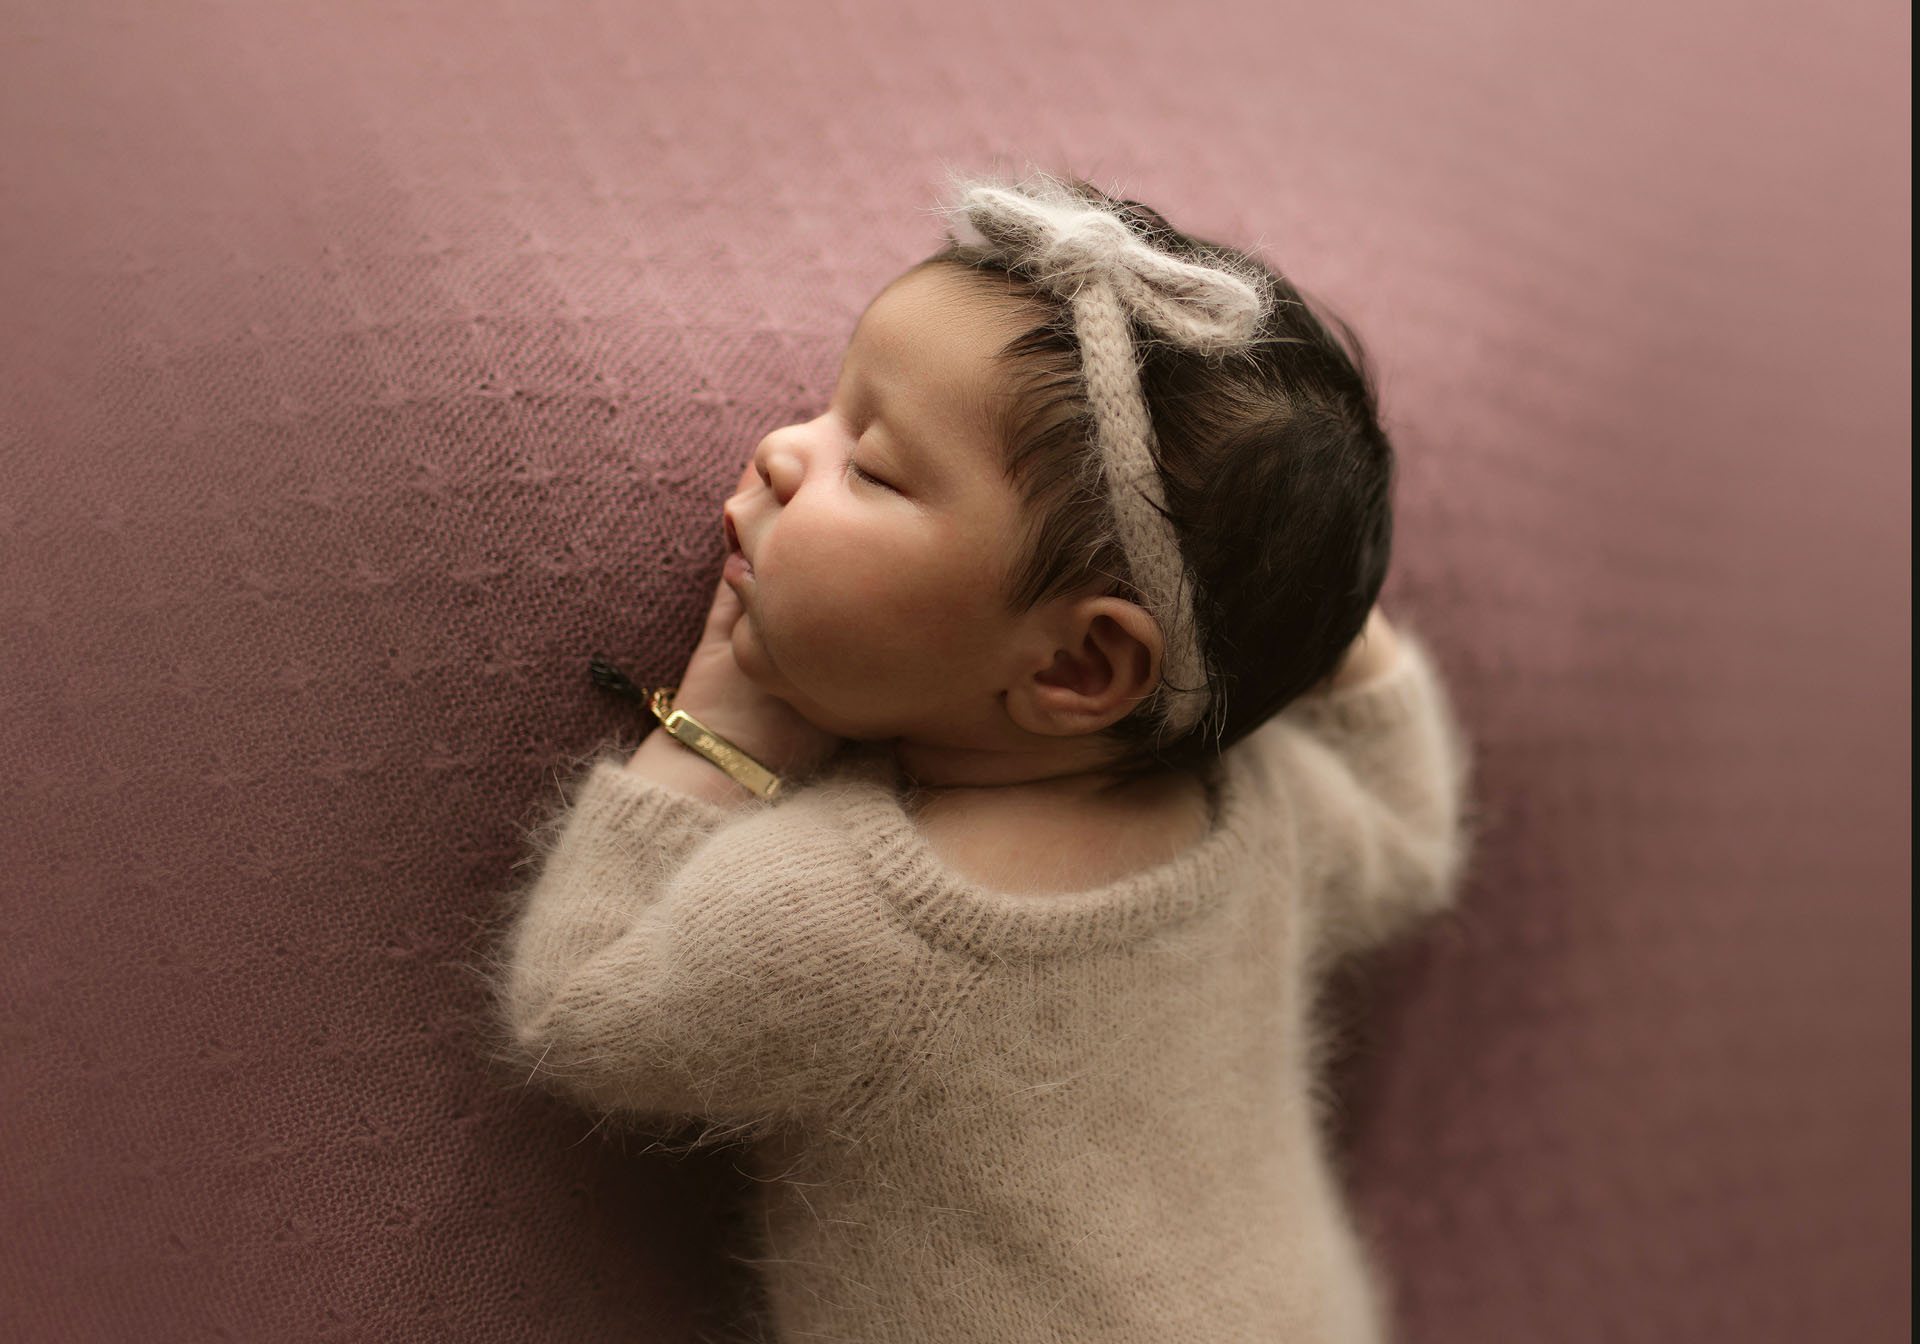 Newborn baby girl portrait on mauve